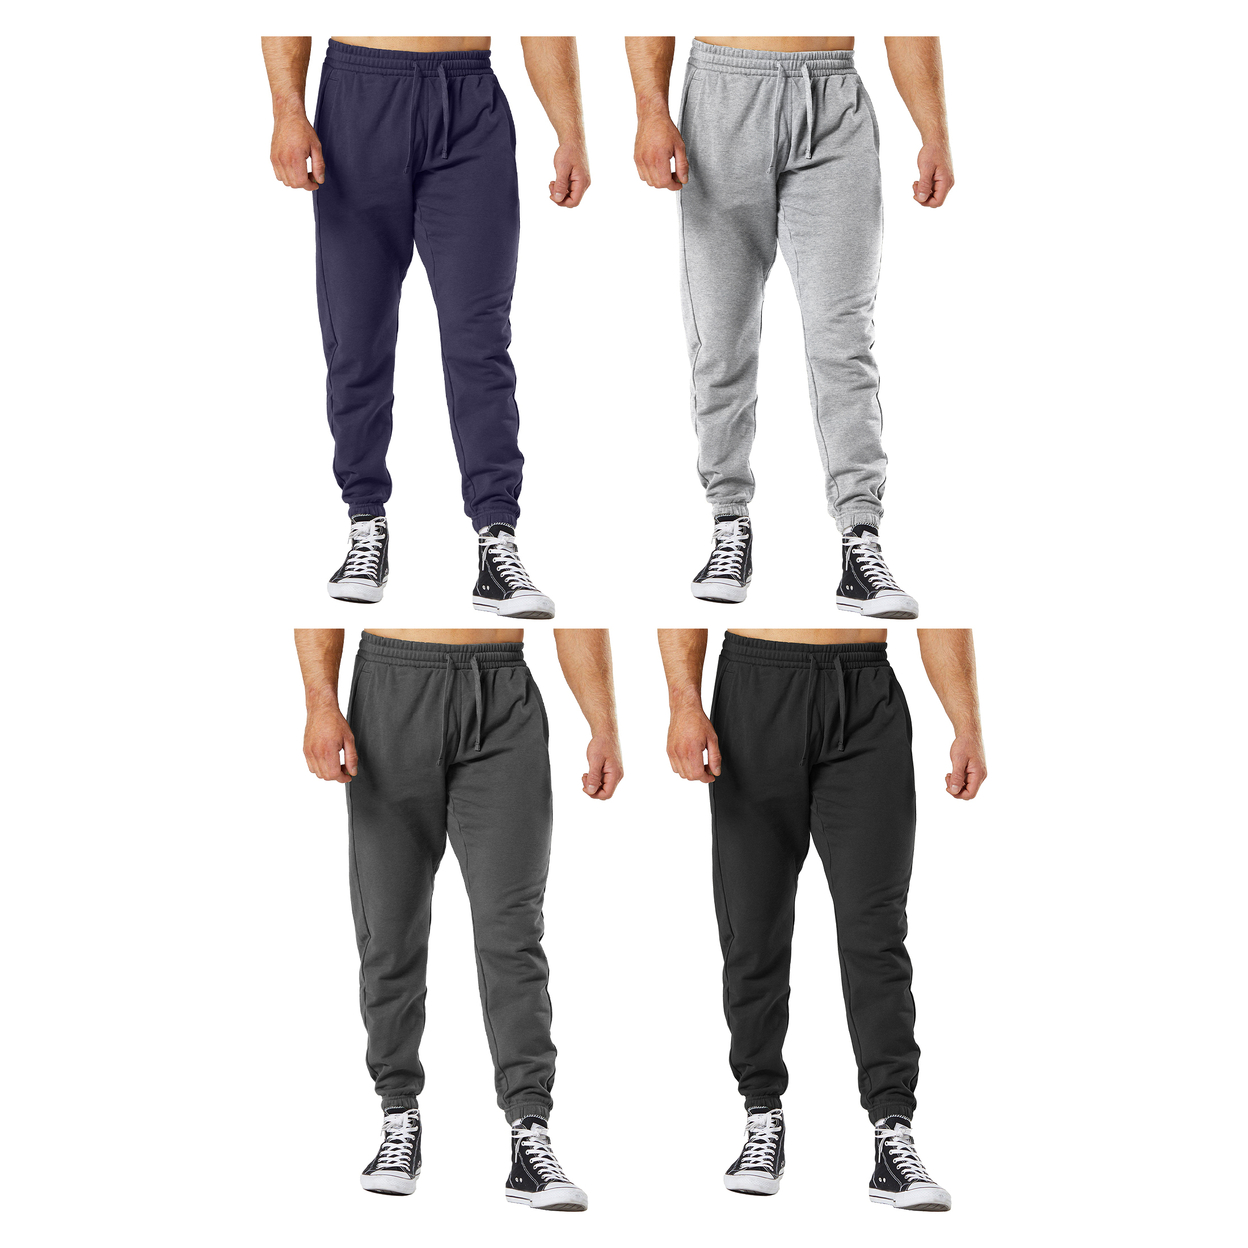 2-Pack: Men's Ultra-Soft Cozy Winter Warm Casual Fleece-Lined Sweatpants Jogger - Black & Navy, Xx-large